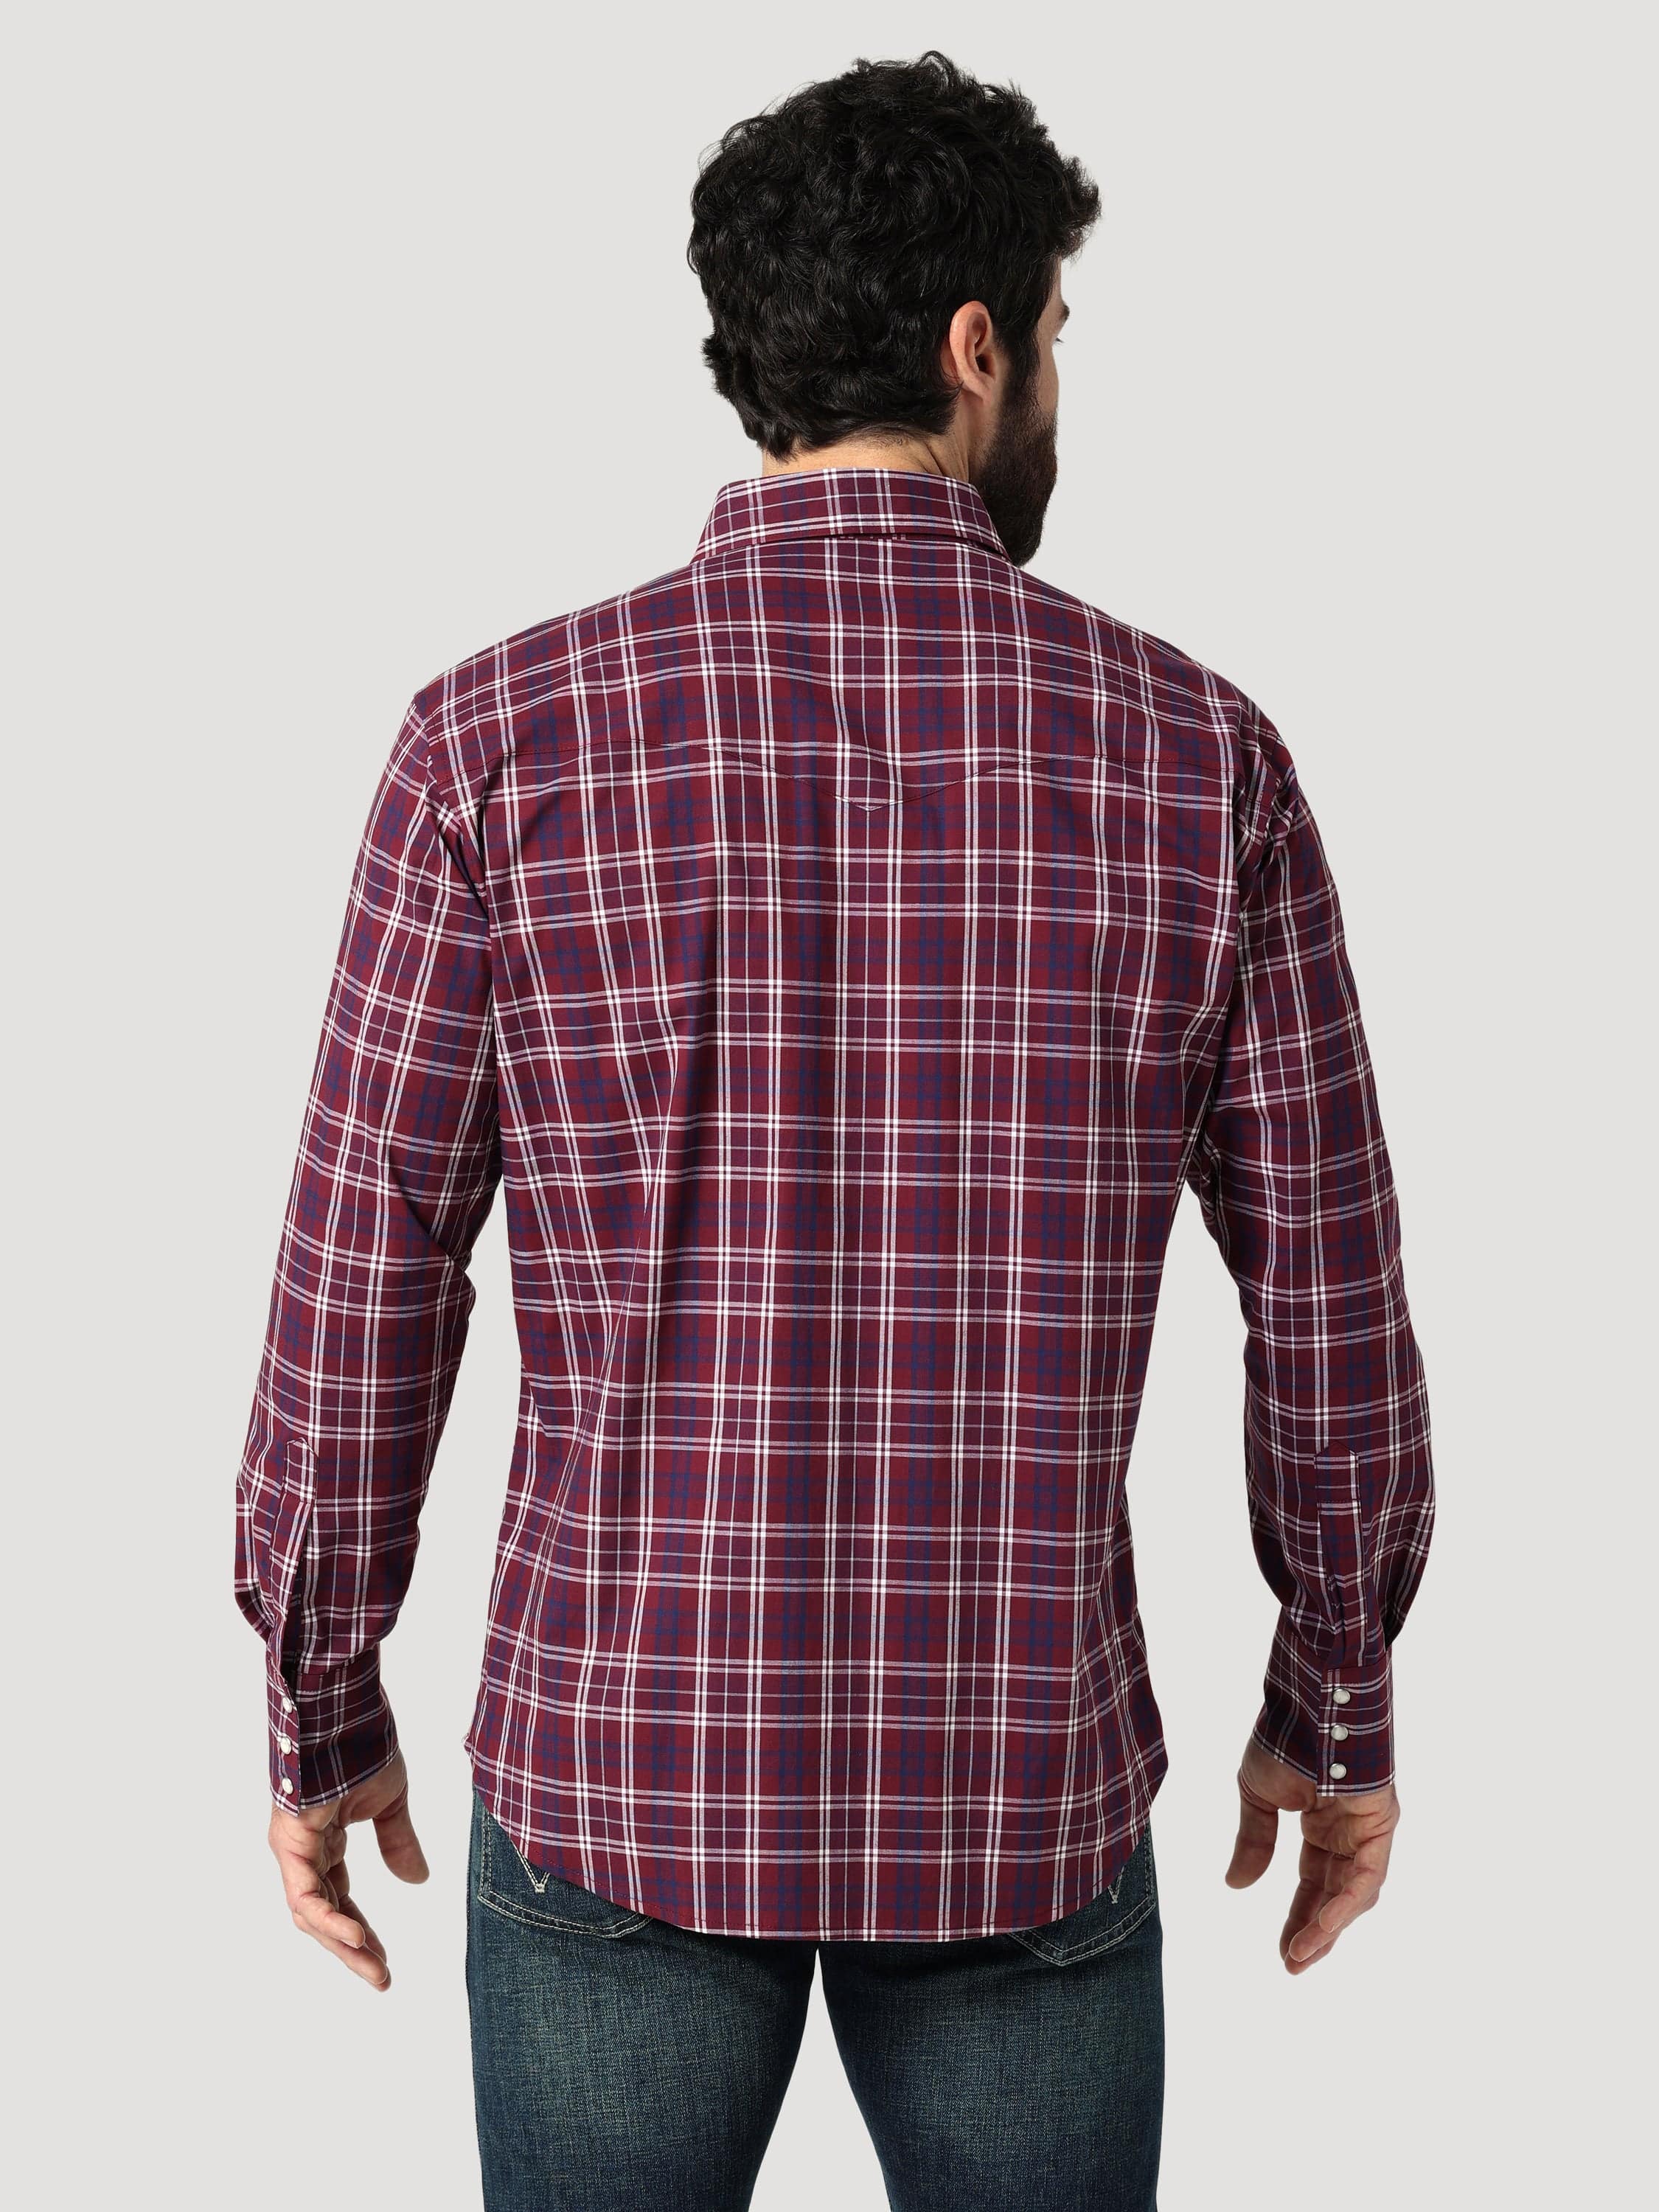 Wrangler Men's Wrinkle Resist Syrah Long Sleeve Western Plaid Shirt 11 -  Russell's Western Wear, Inc.